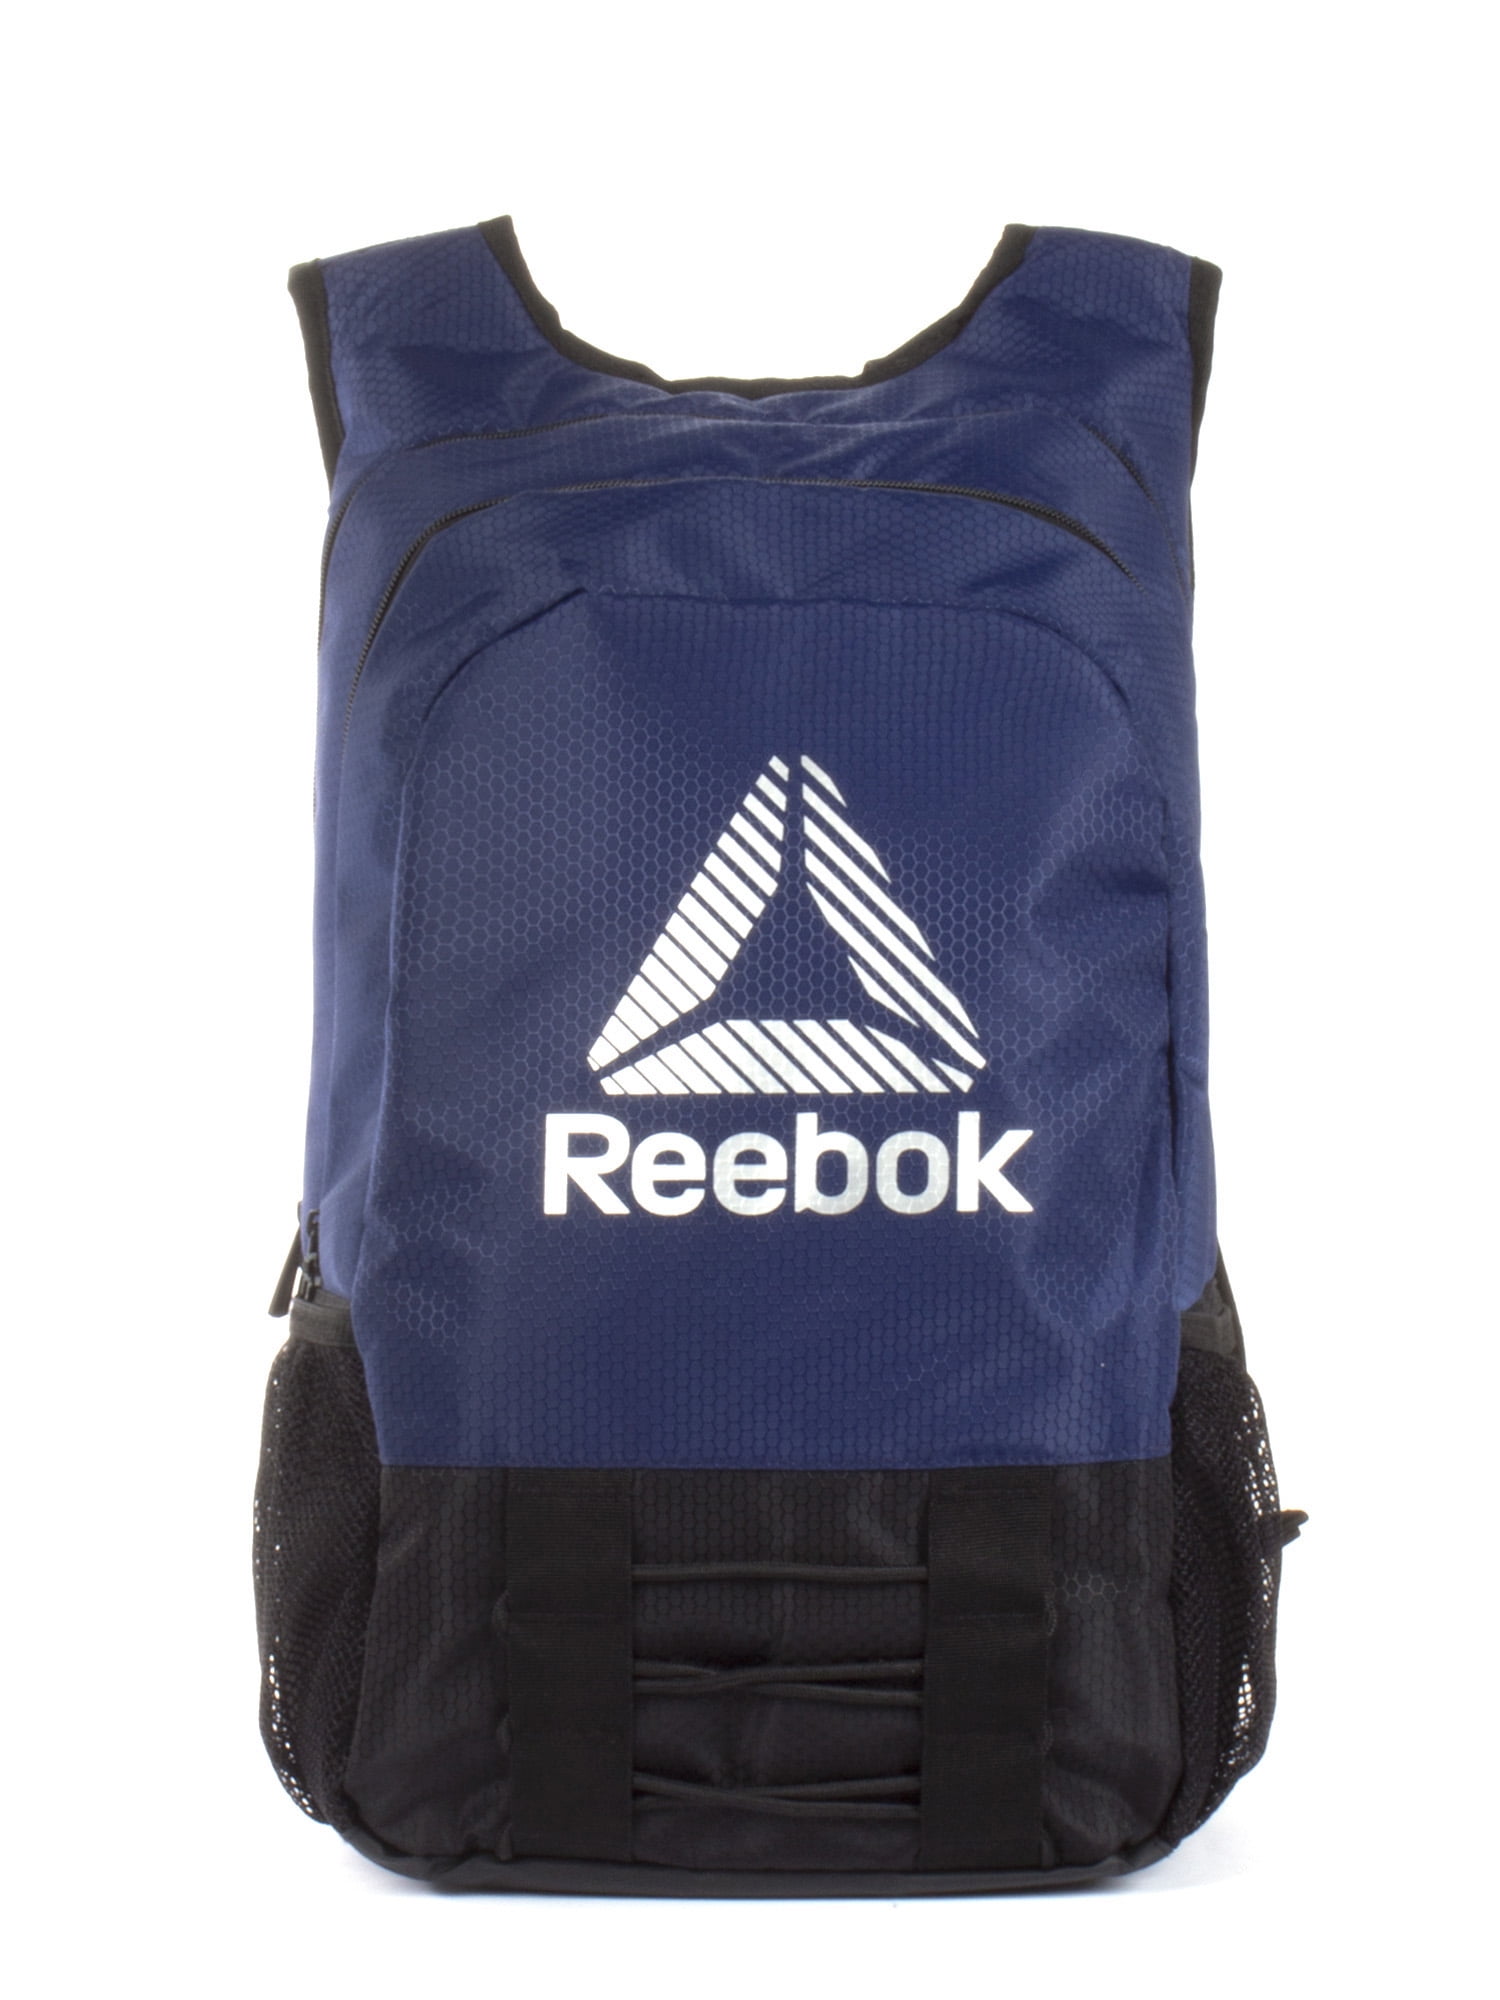 Reebok Navy Backpack - Walmart.com